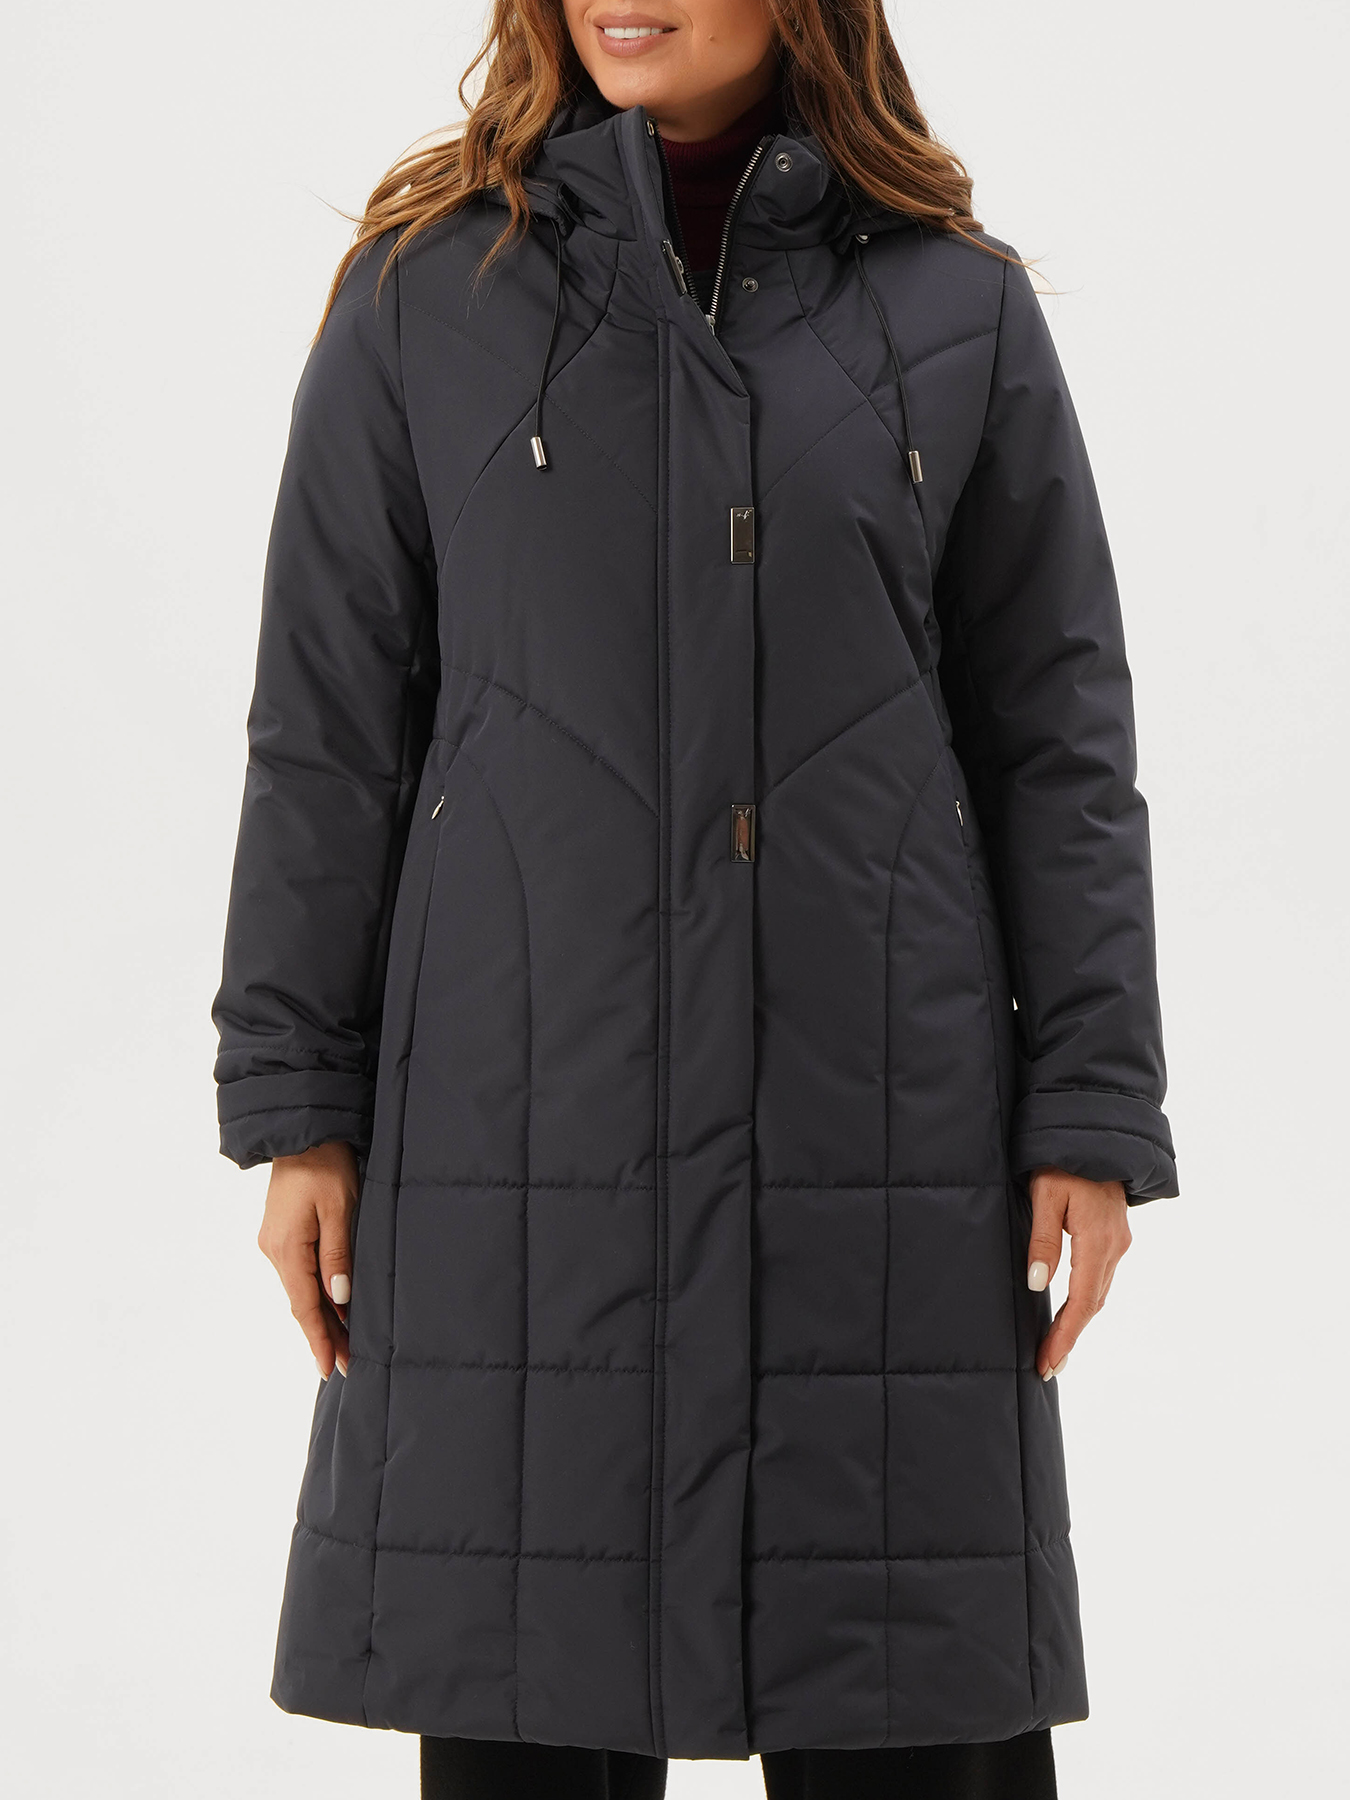 Пальто зимнее Maritta 433643-022, цвет темно-синий, размер 48